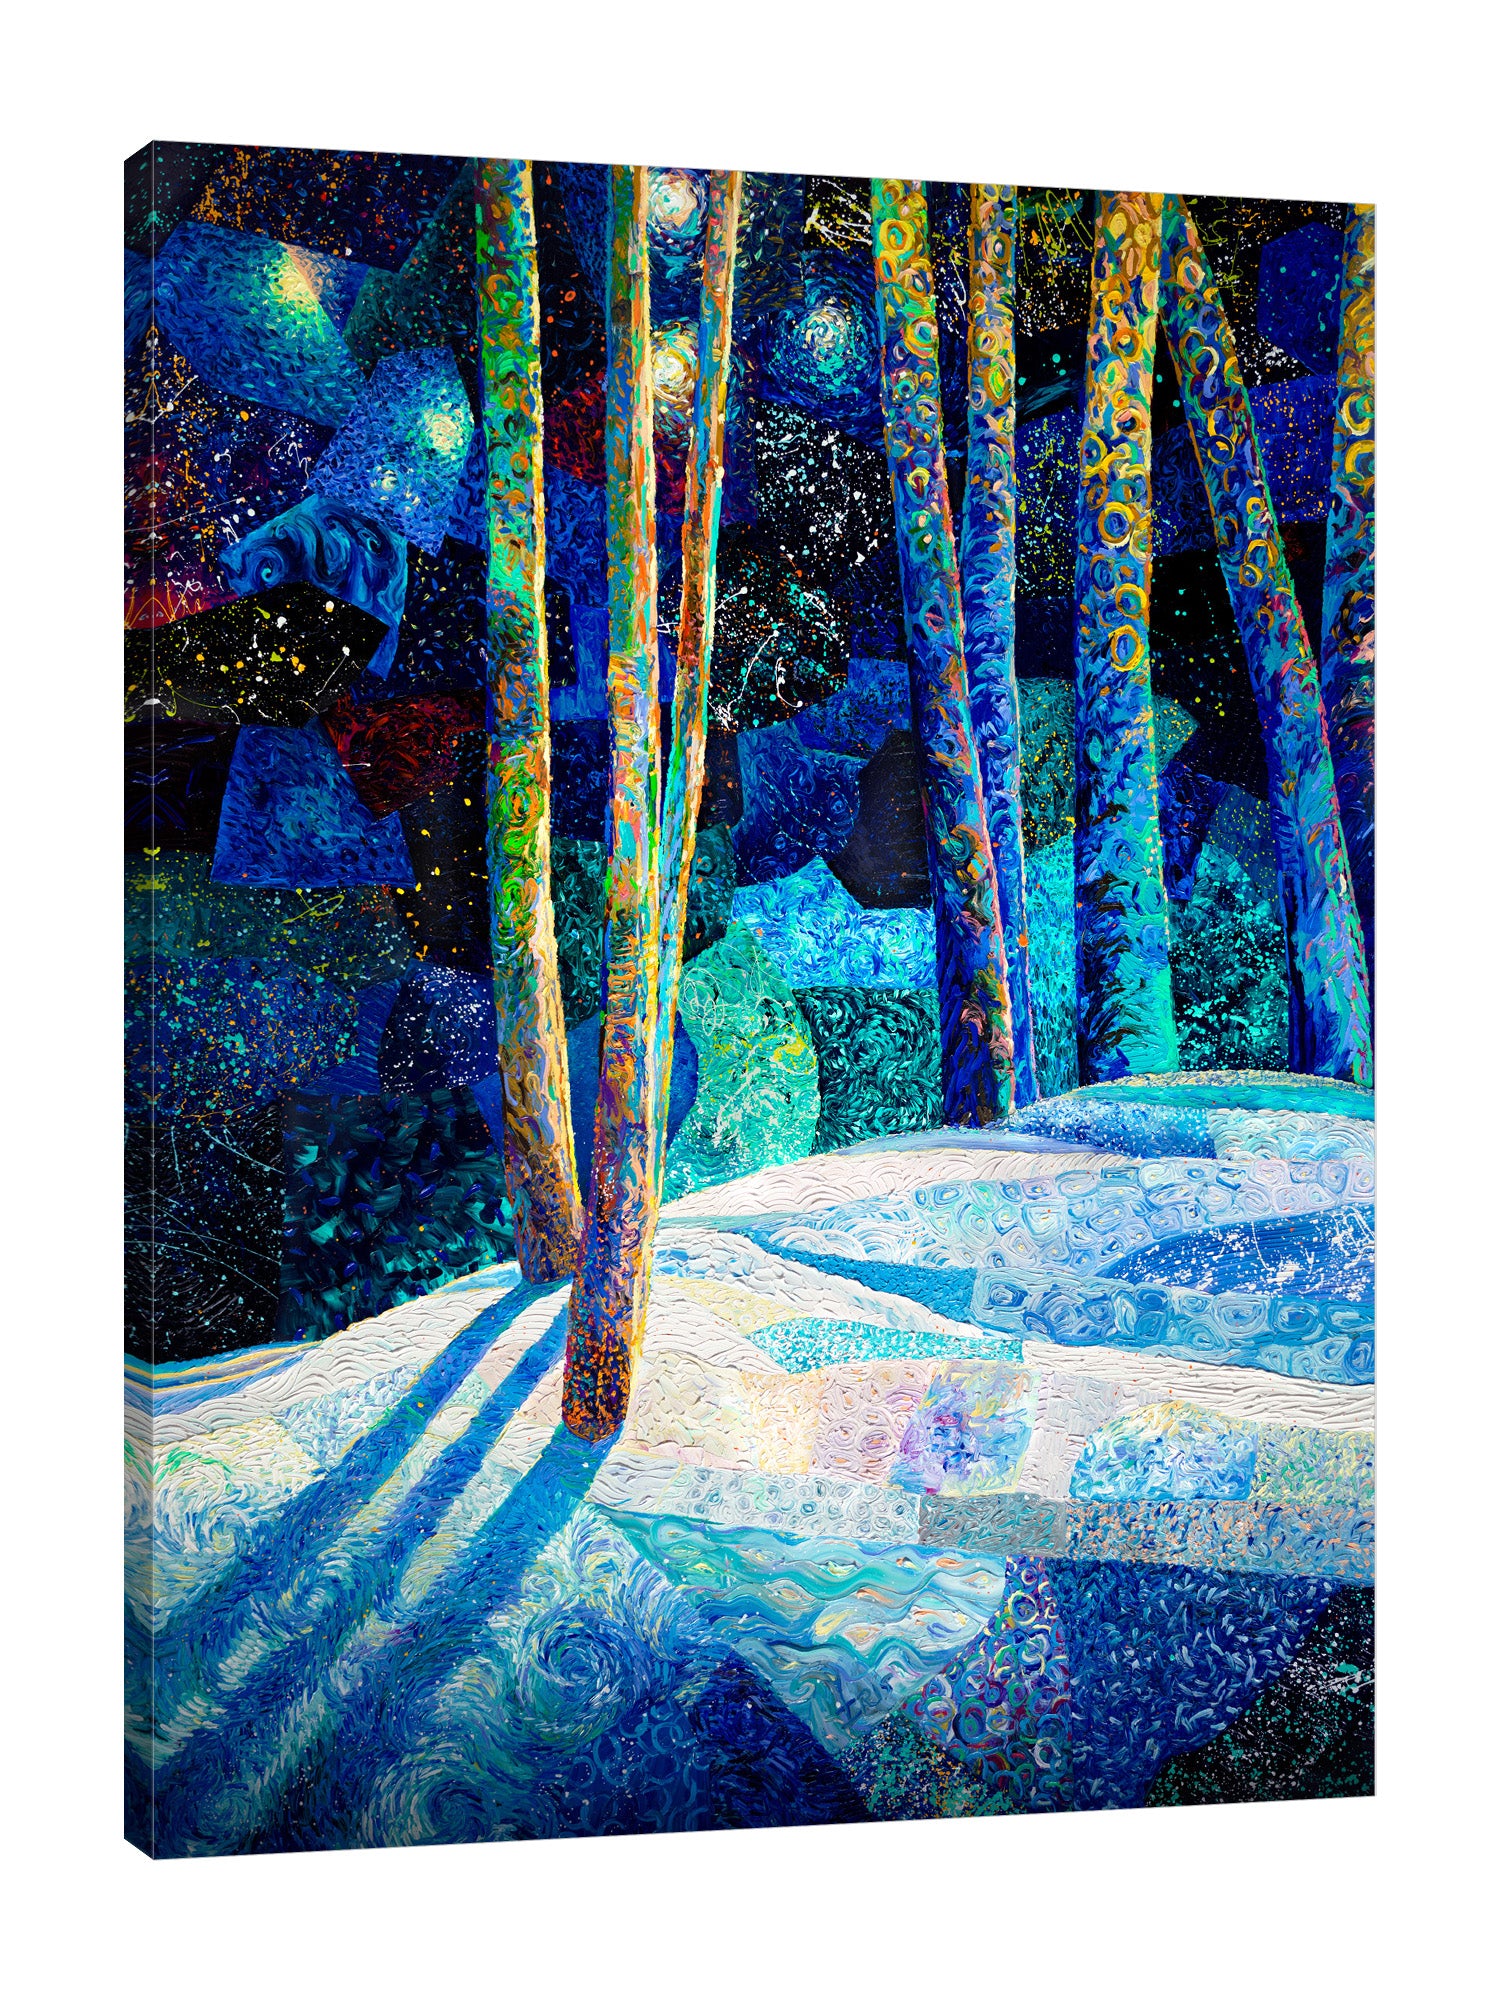 Iris-Scott,Modern & Contemporary,Landscape & Nature,Impressionism,finger paint,animal,nature,surrealism,trees,